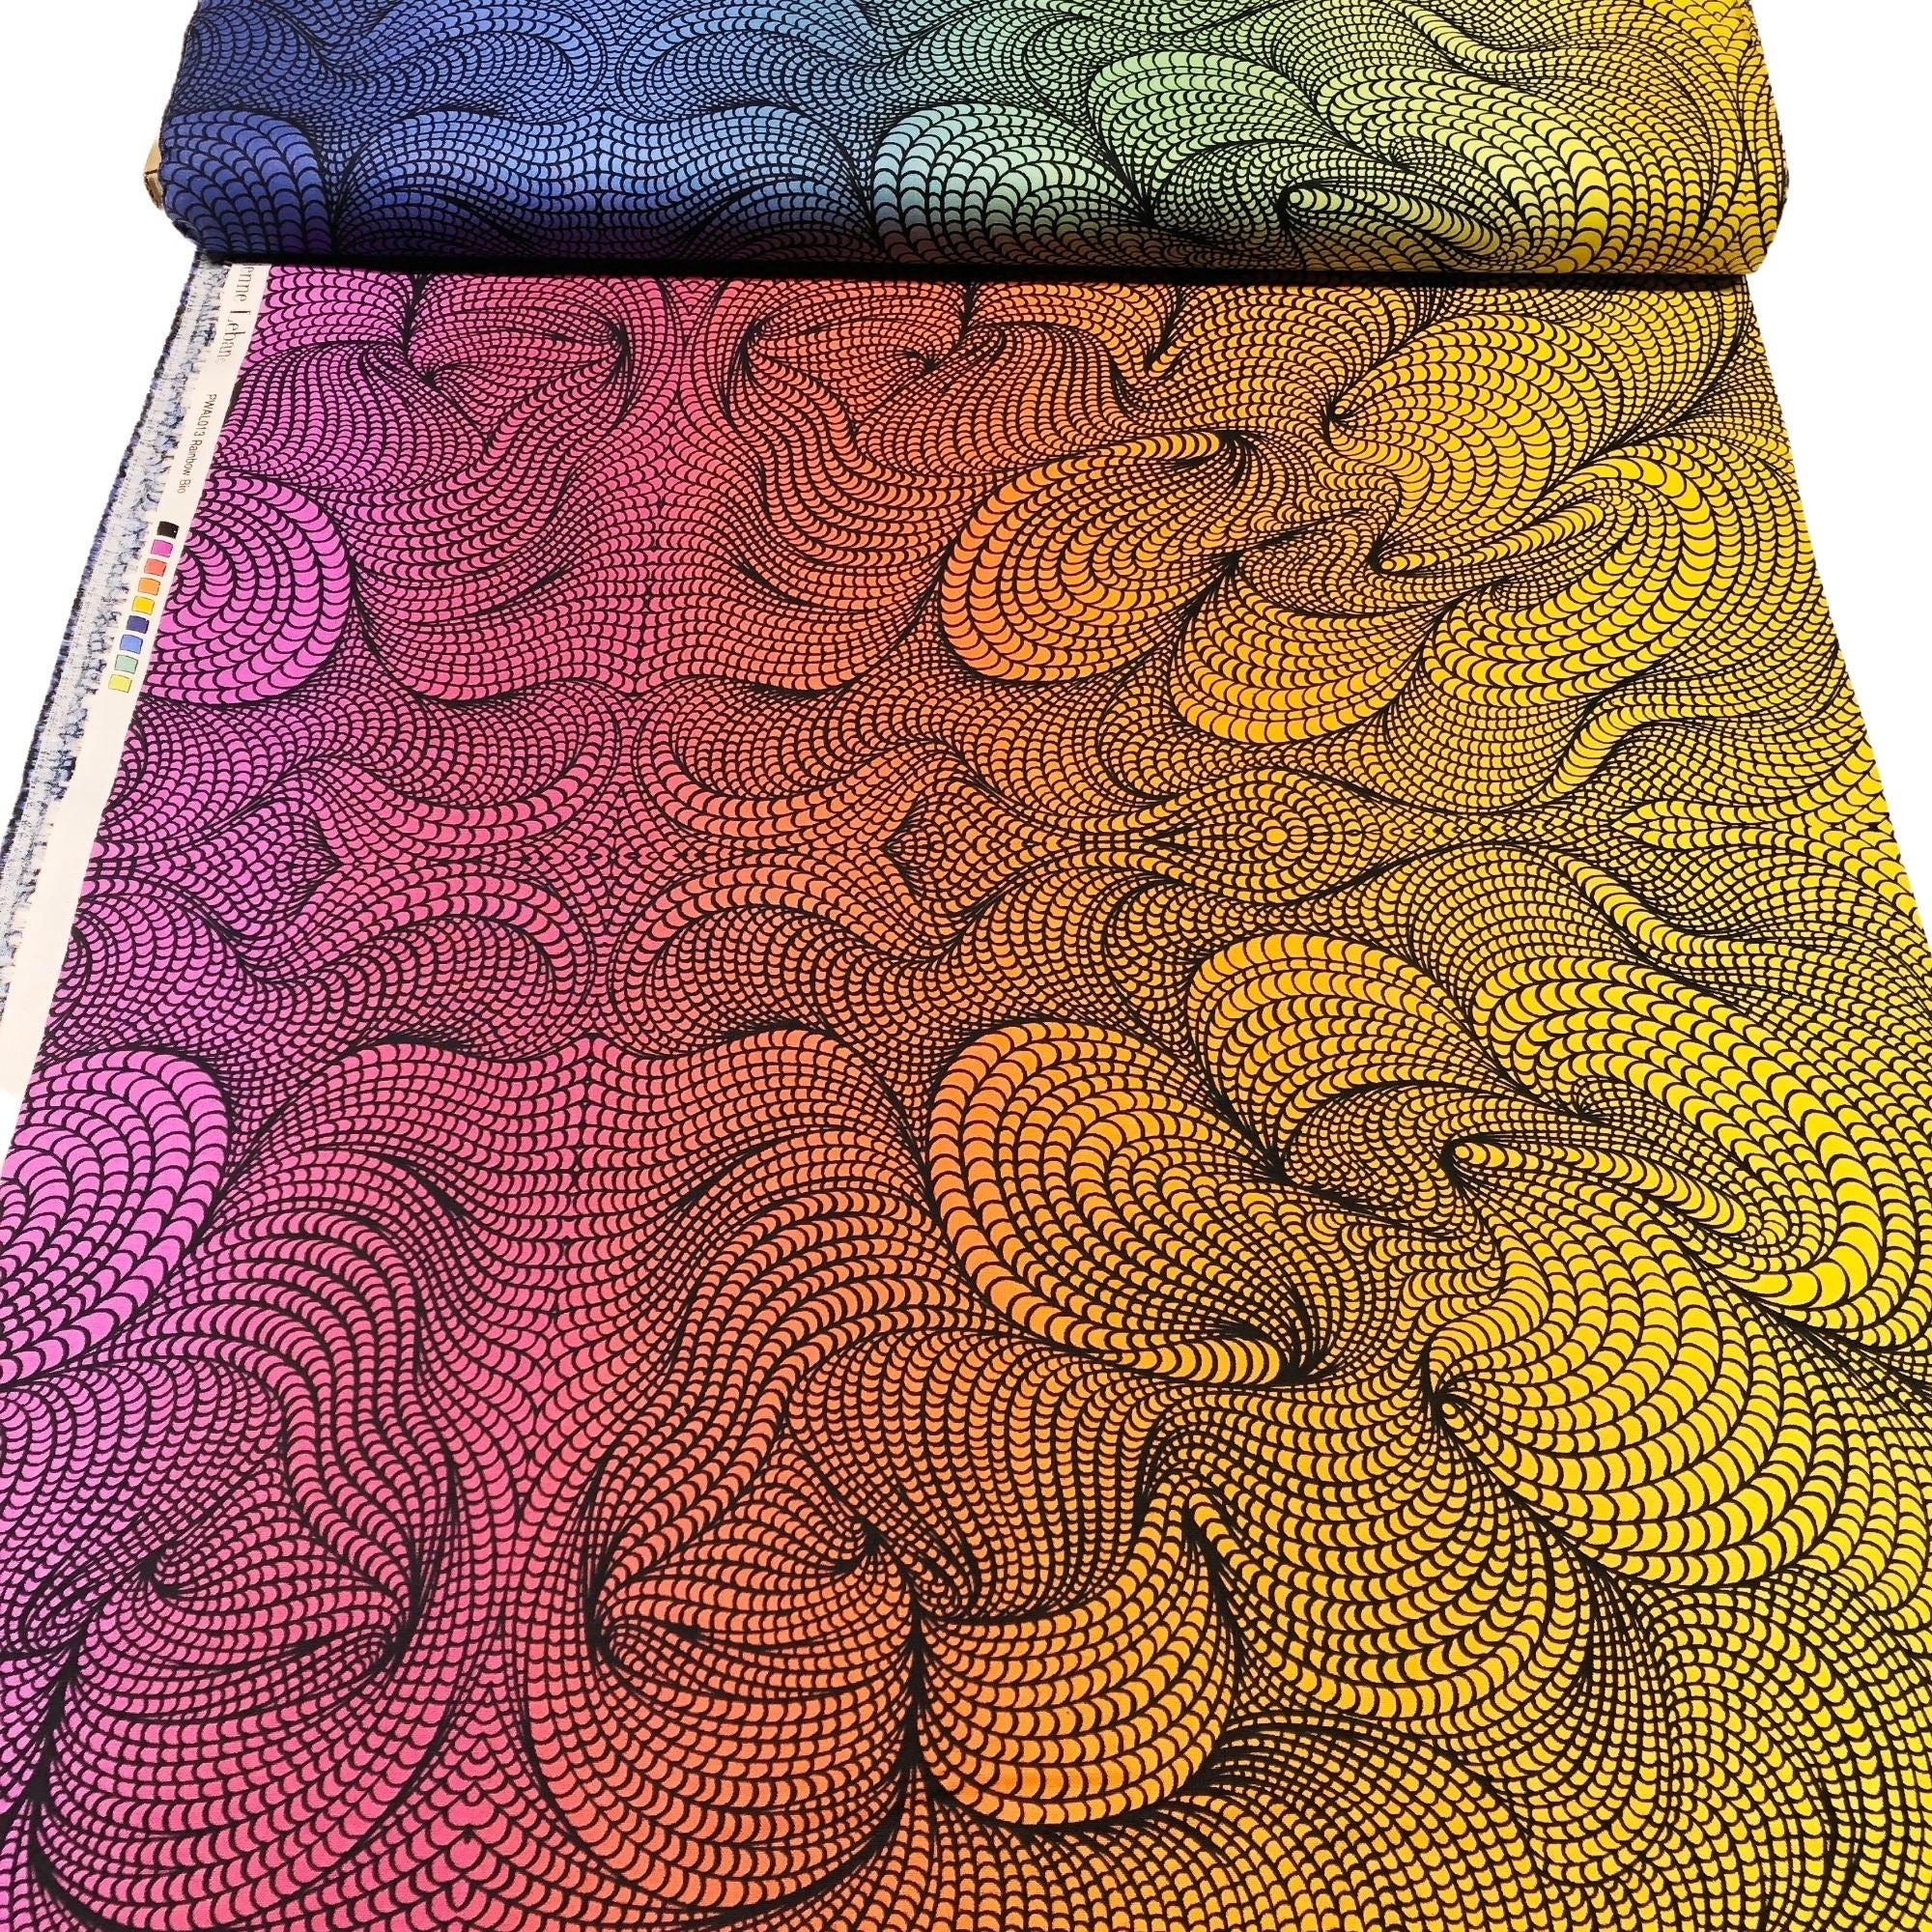 Bio Geo 2 Rainbow Adrienne Leban for Free Spirit Cotton Fabric